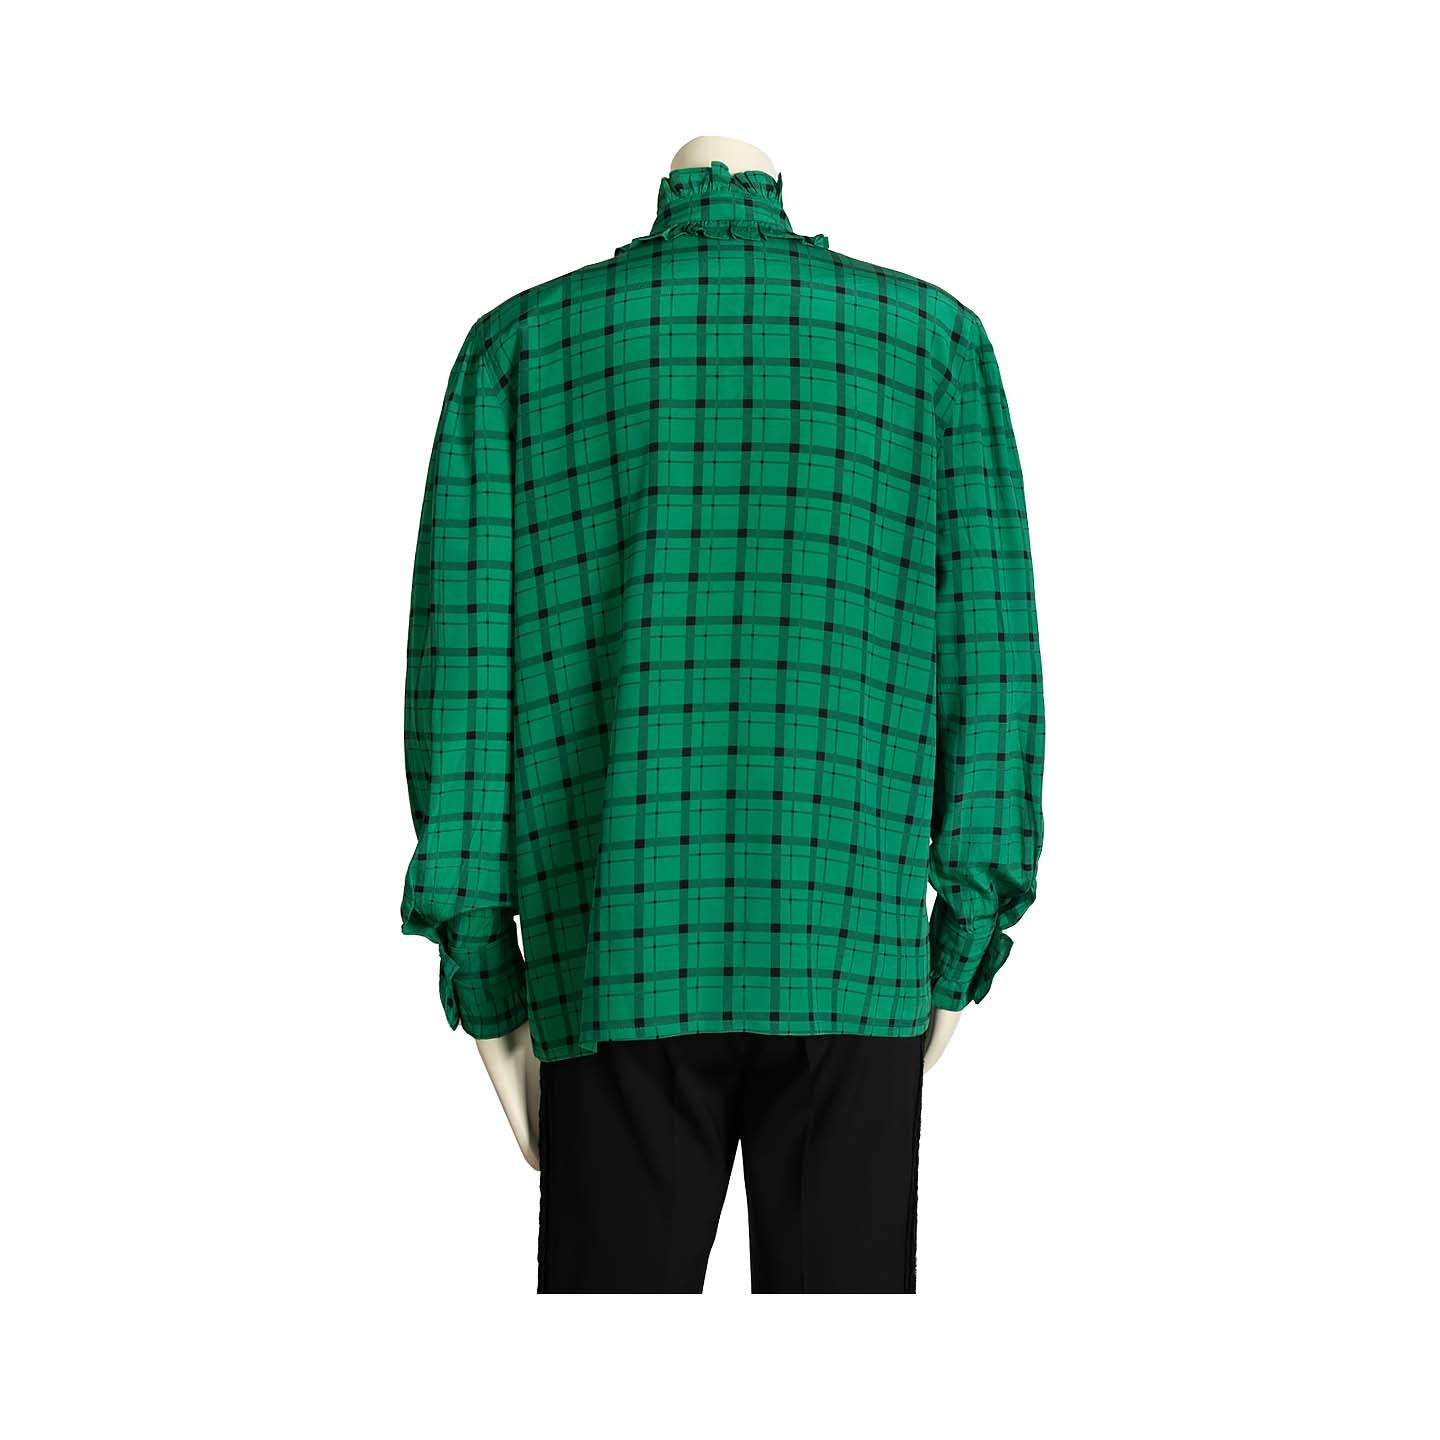 Guy Laroche houndstooth green blouse - M - 1980s